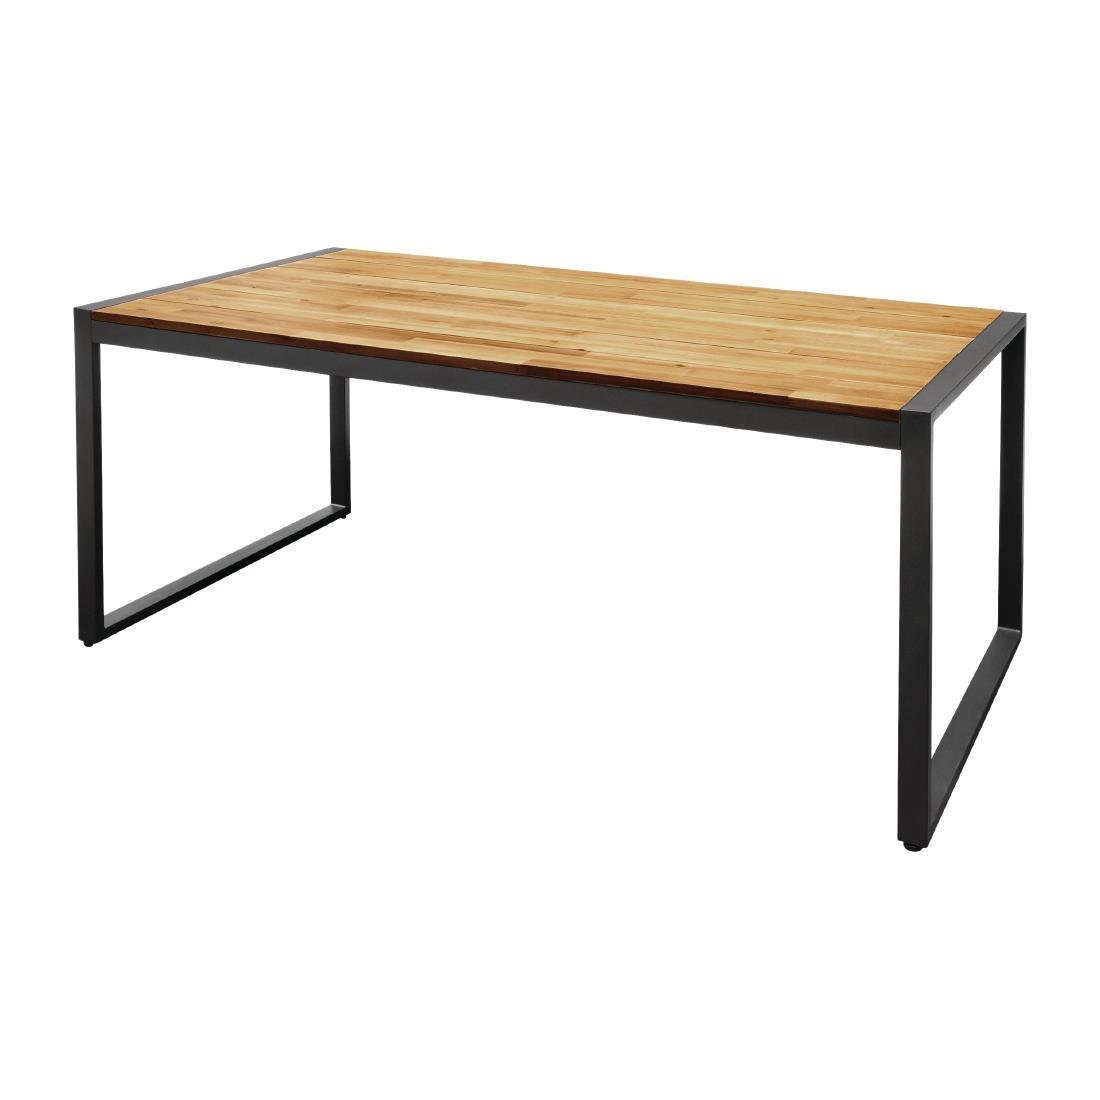 Bolero Acacia Wood and Steel Rectangular Industrial Table 1800mm - DS157  - 2